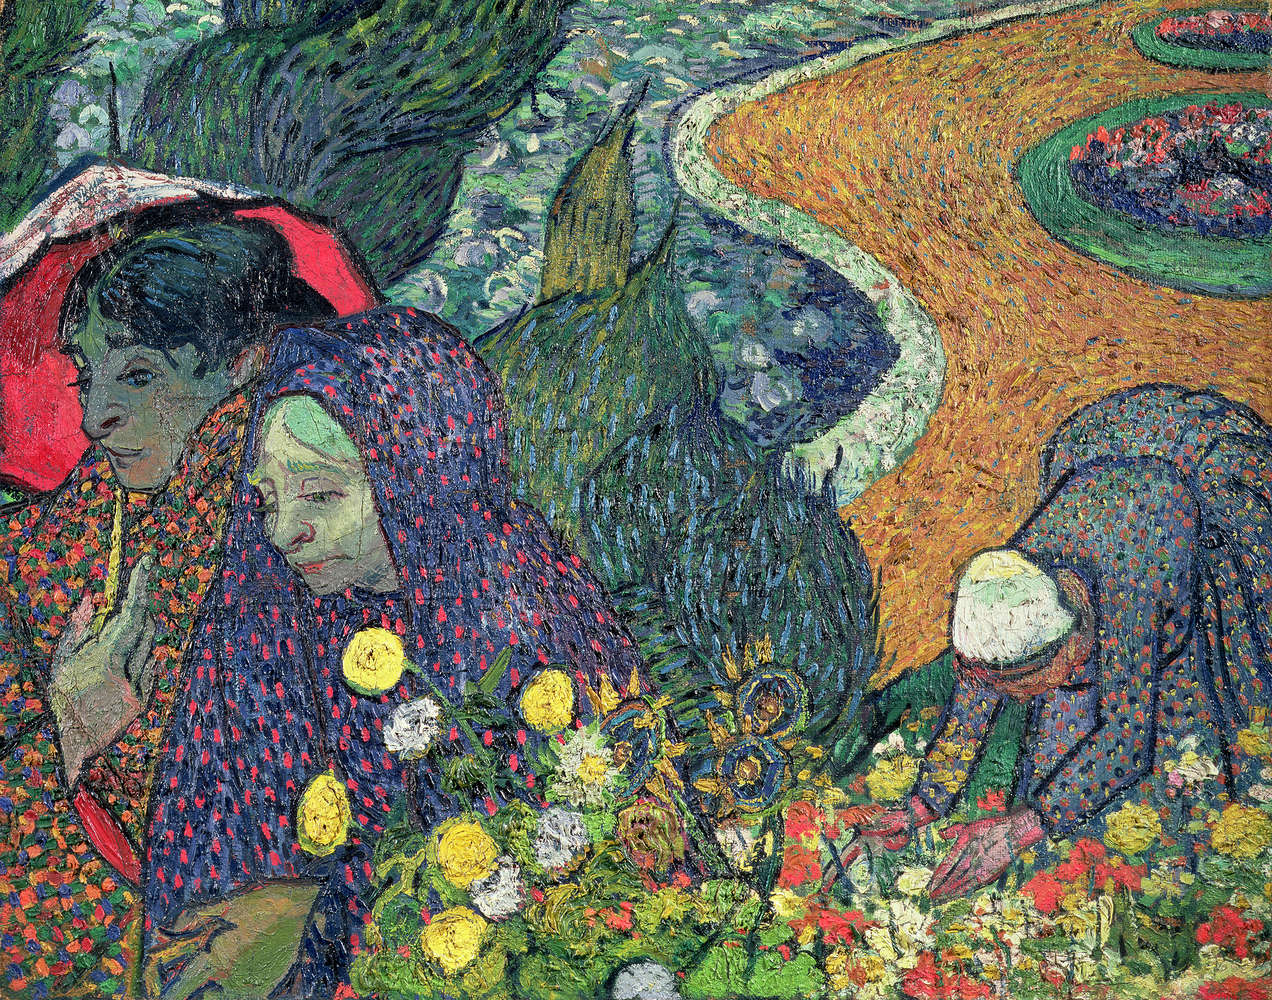             Photo wallpaper "Walk Arles" by Vincent van Gogh
        